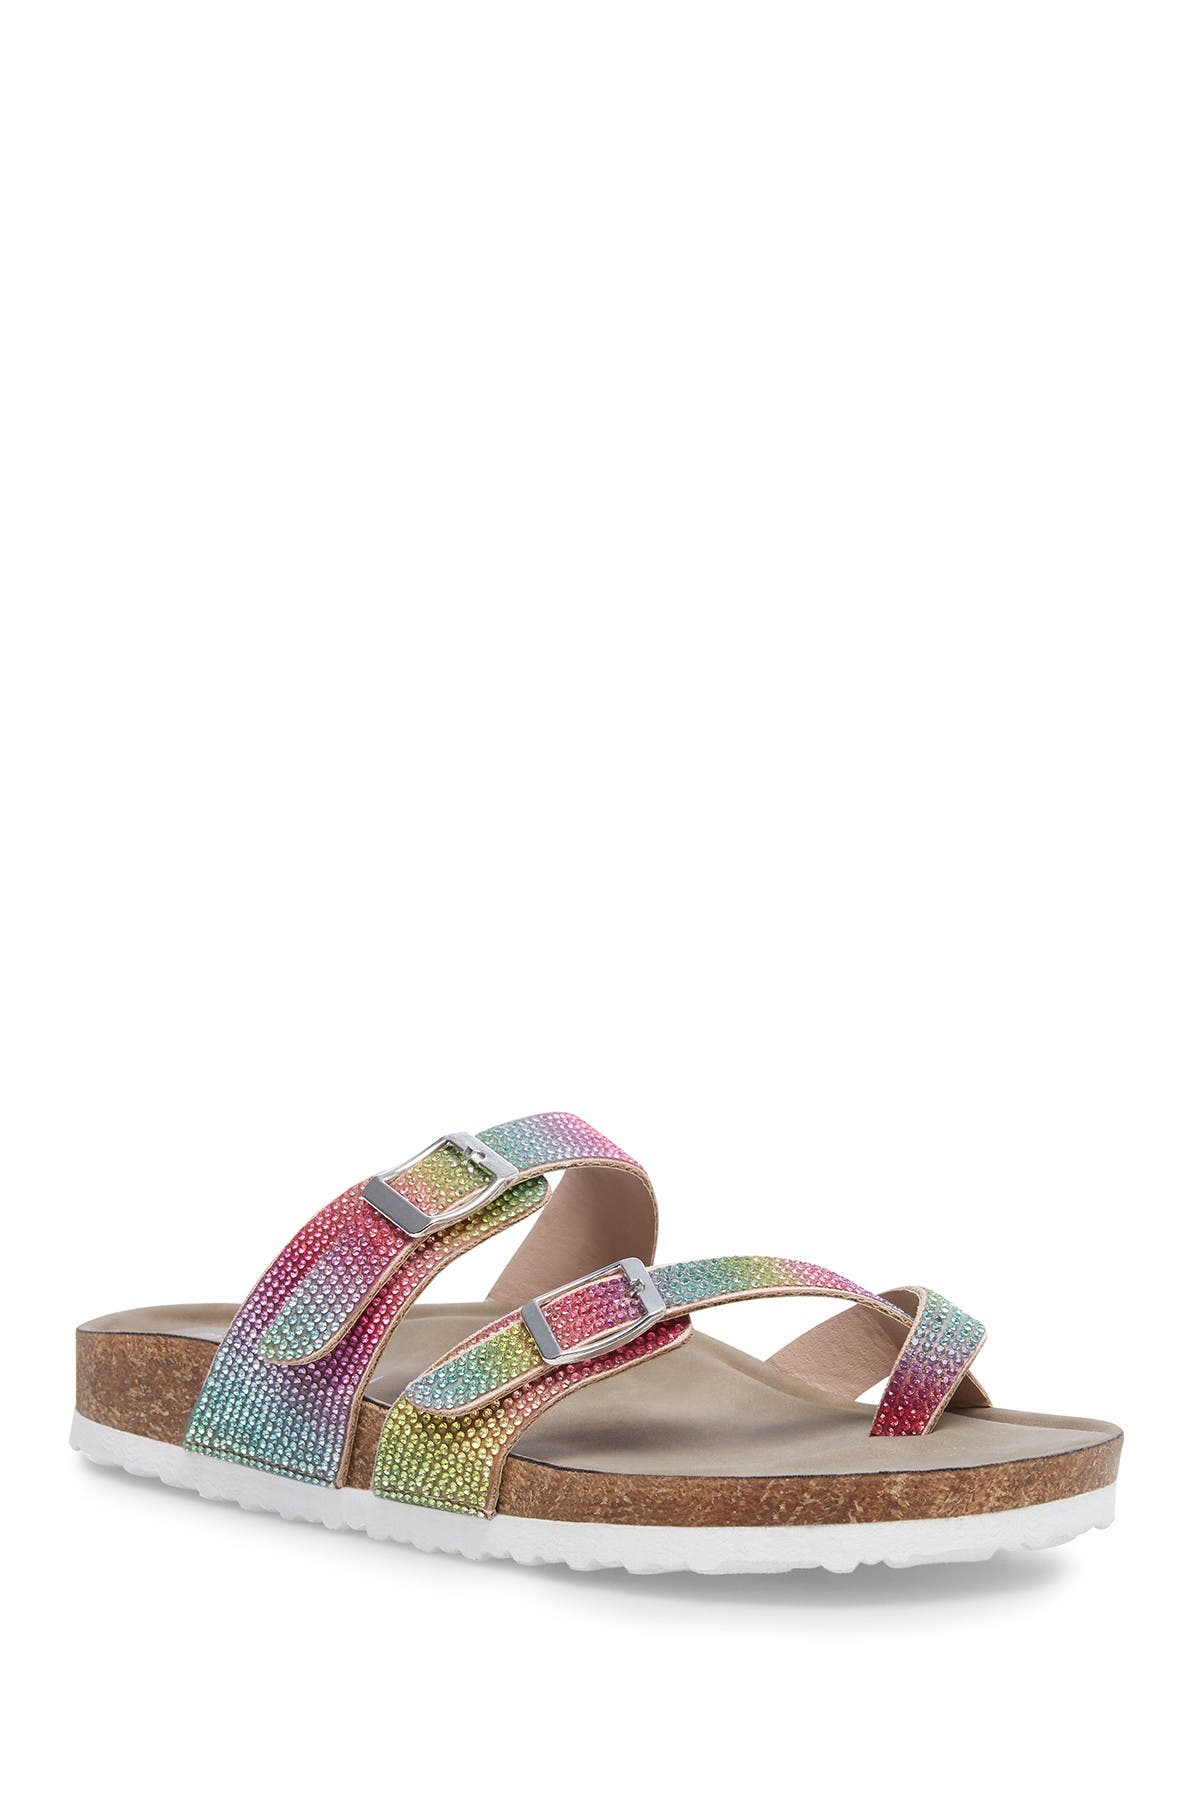 Madden Girl Brycee Crystal Embellished Slide Sandal In Rainbow | ModeSens